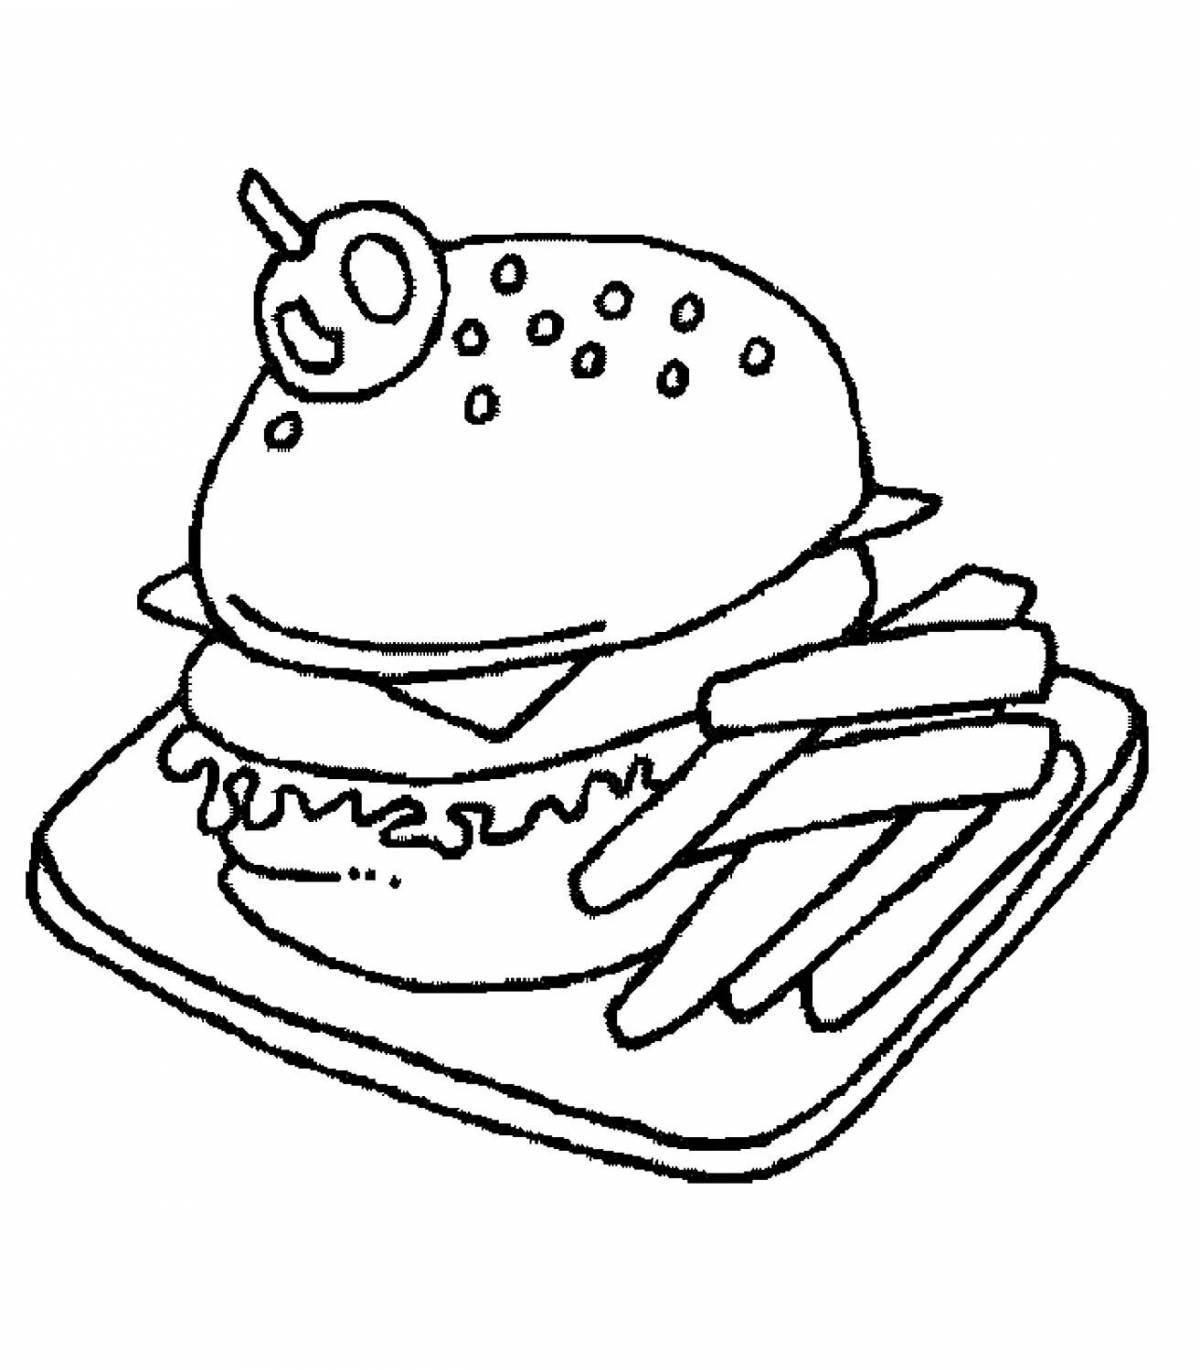 Fun hamburger coloring page for kids